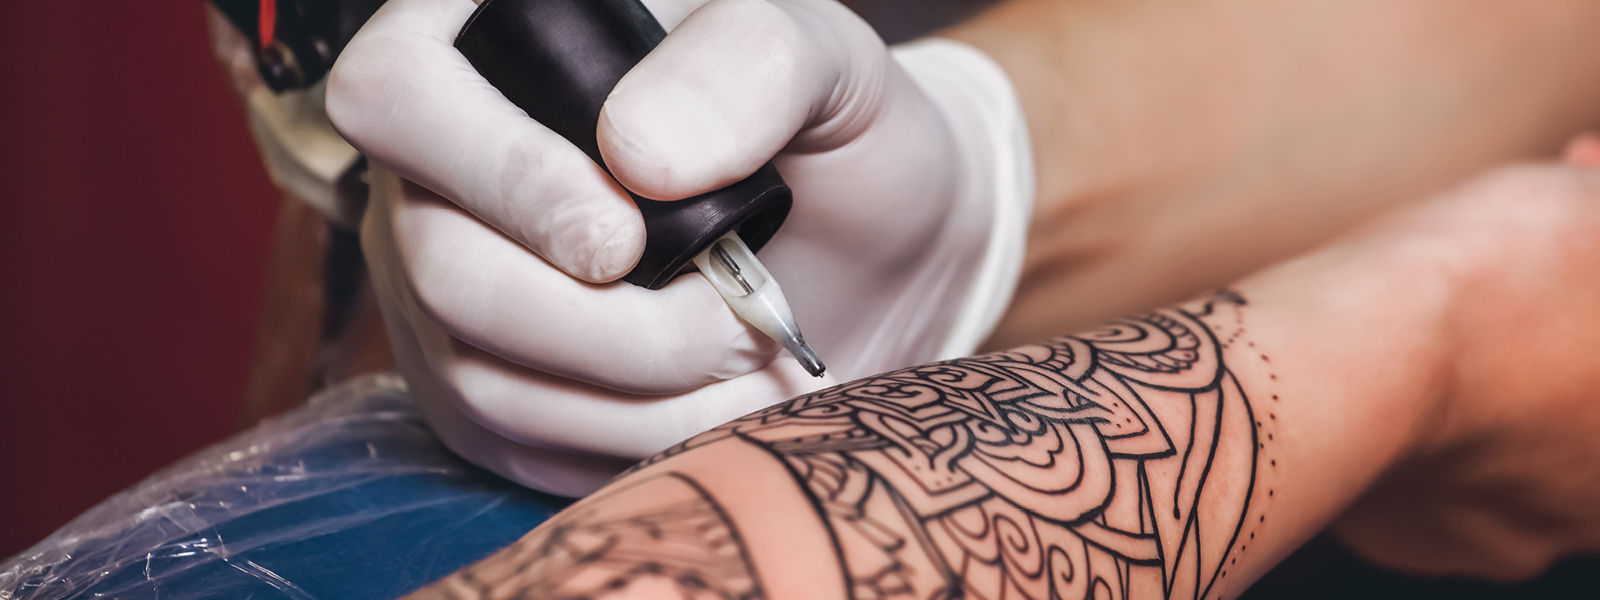 Tattoo artist working on an arm